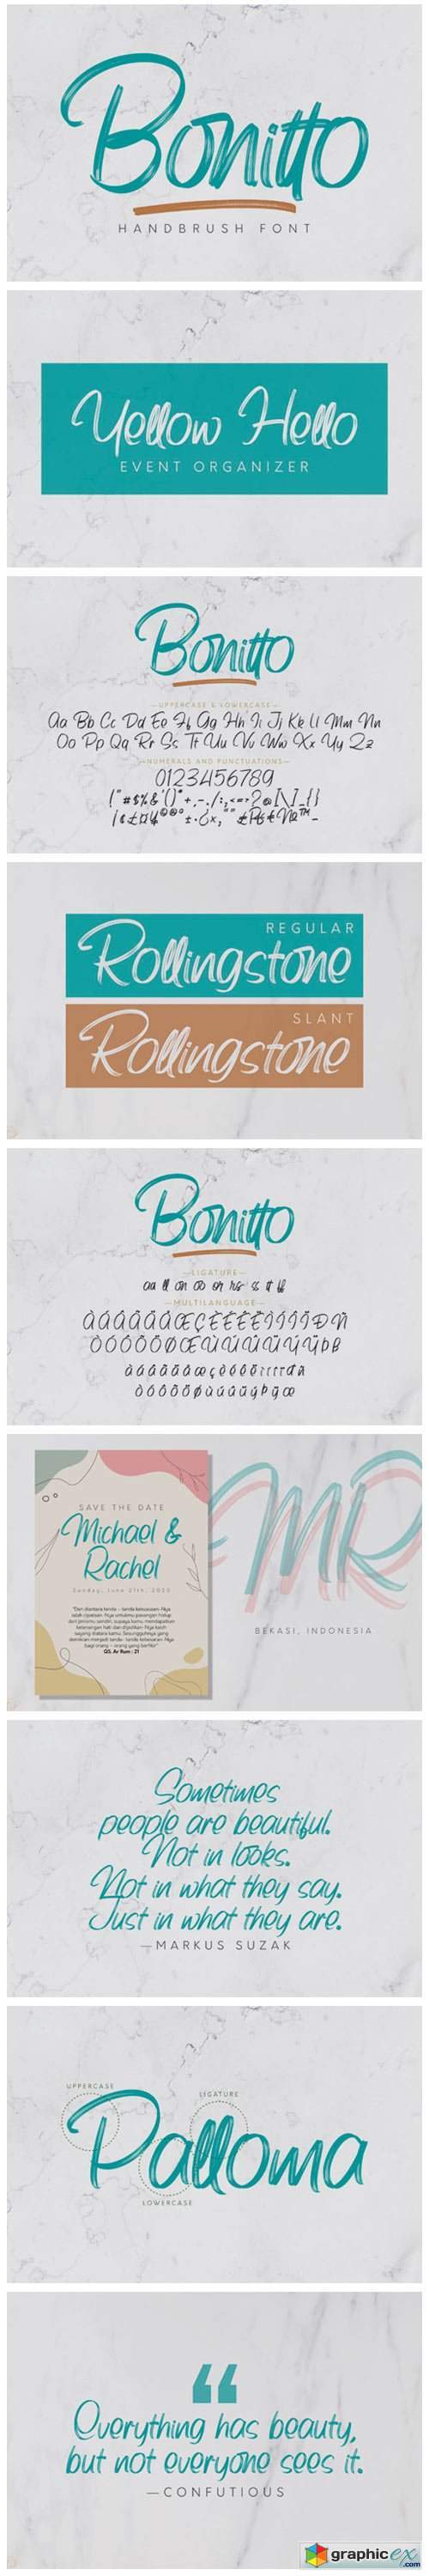 Bonitto Font